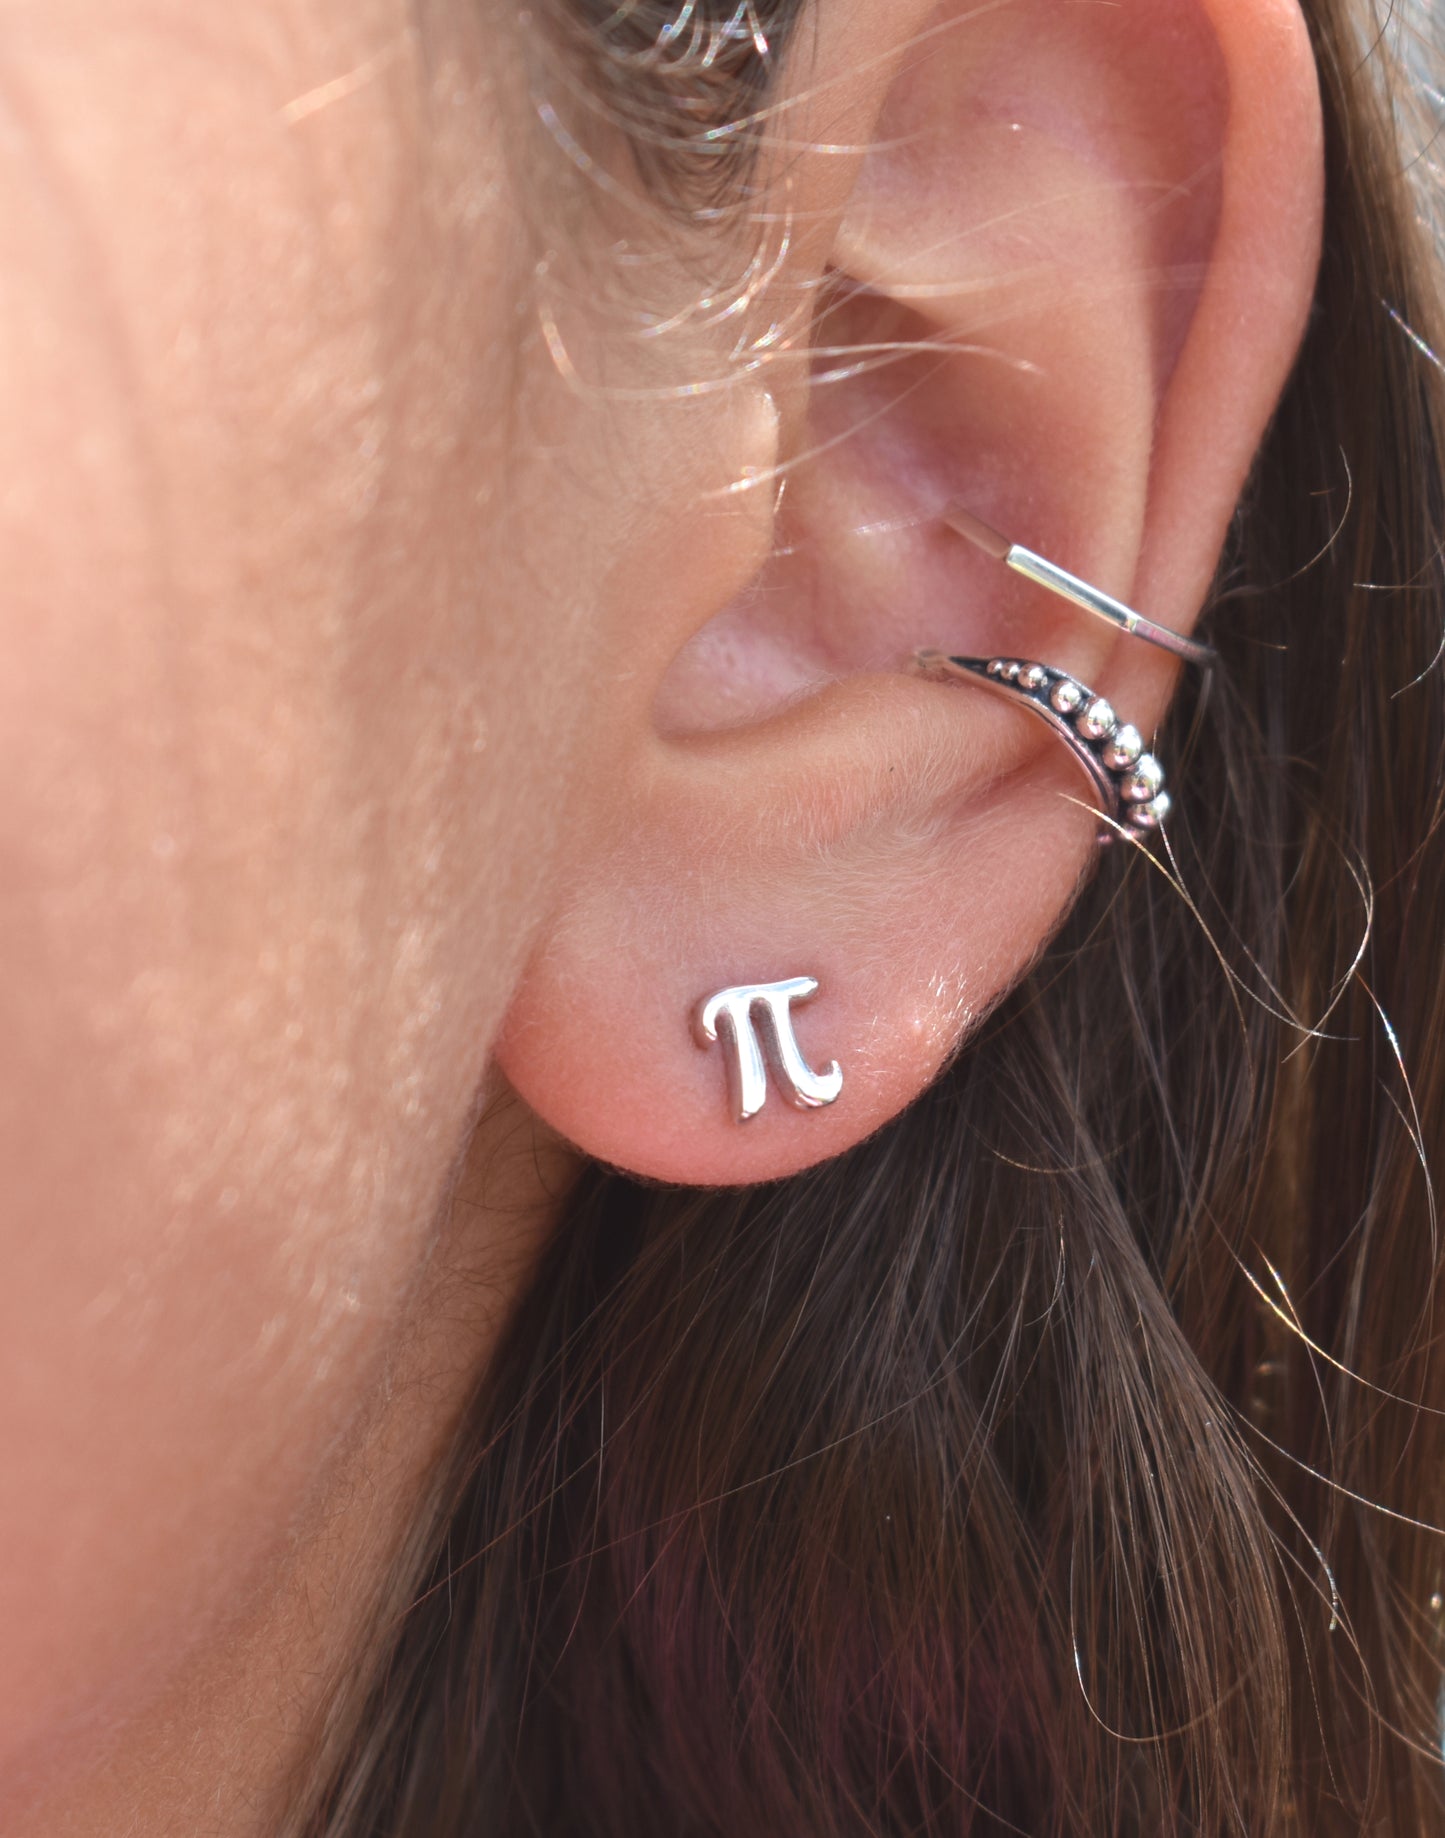 Pi Stud Earrings-Math Gifts, Pi Day-Sterling Silver earrings